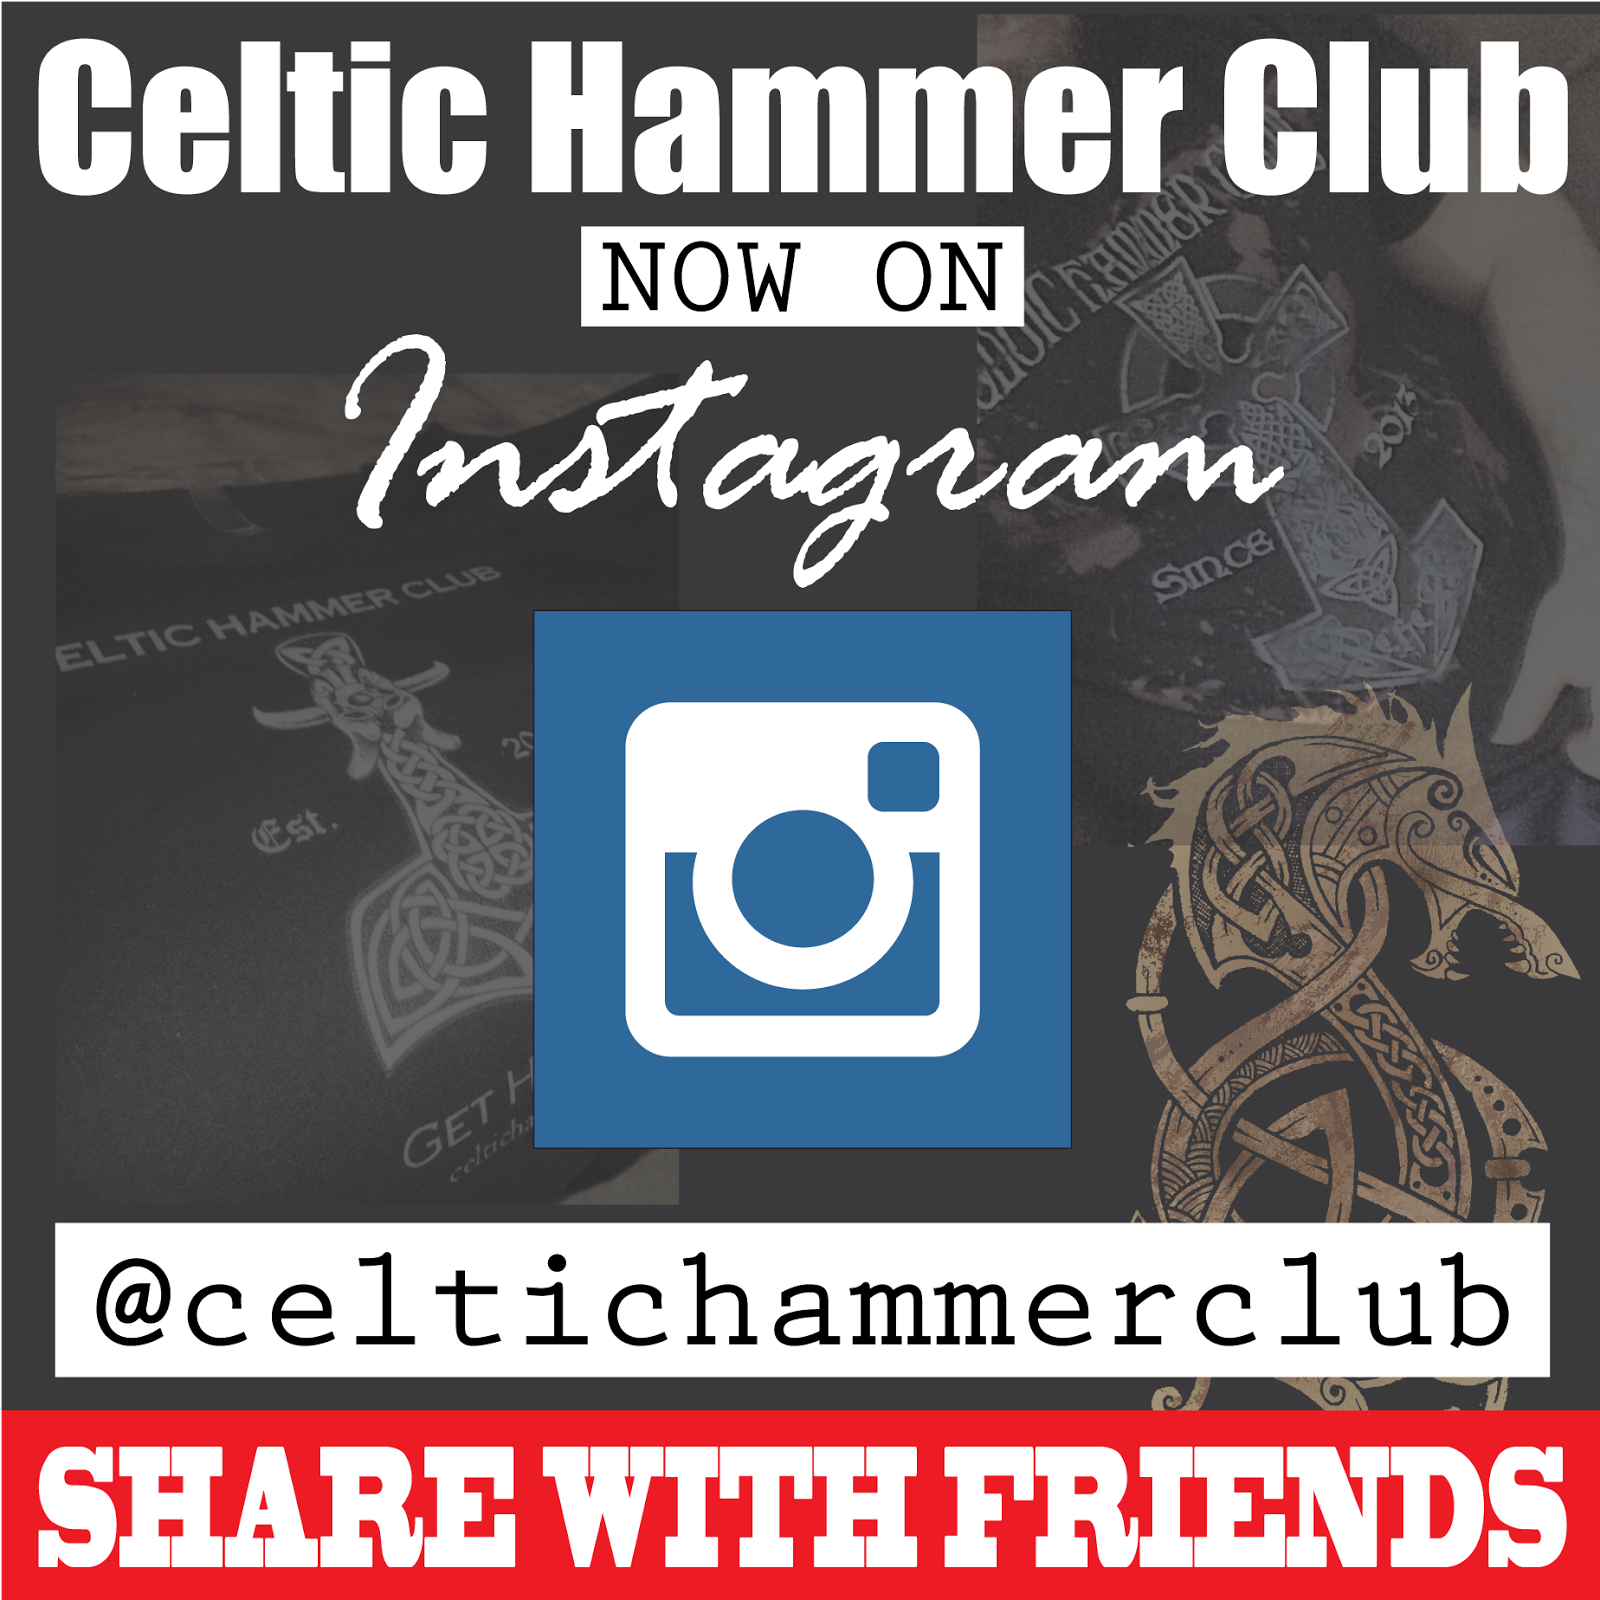 Follow Celtic Hammer Club on Instagram